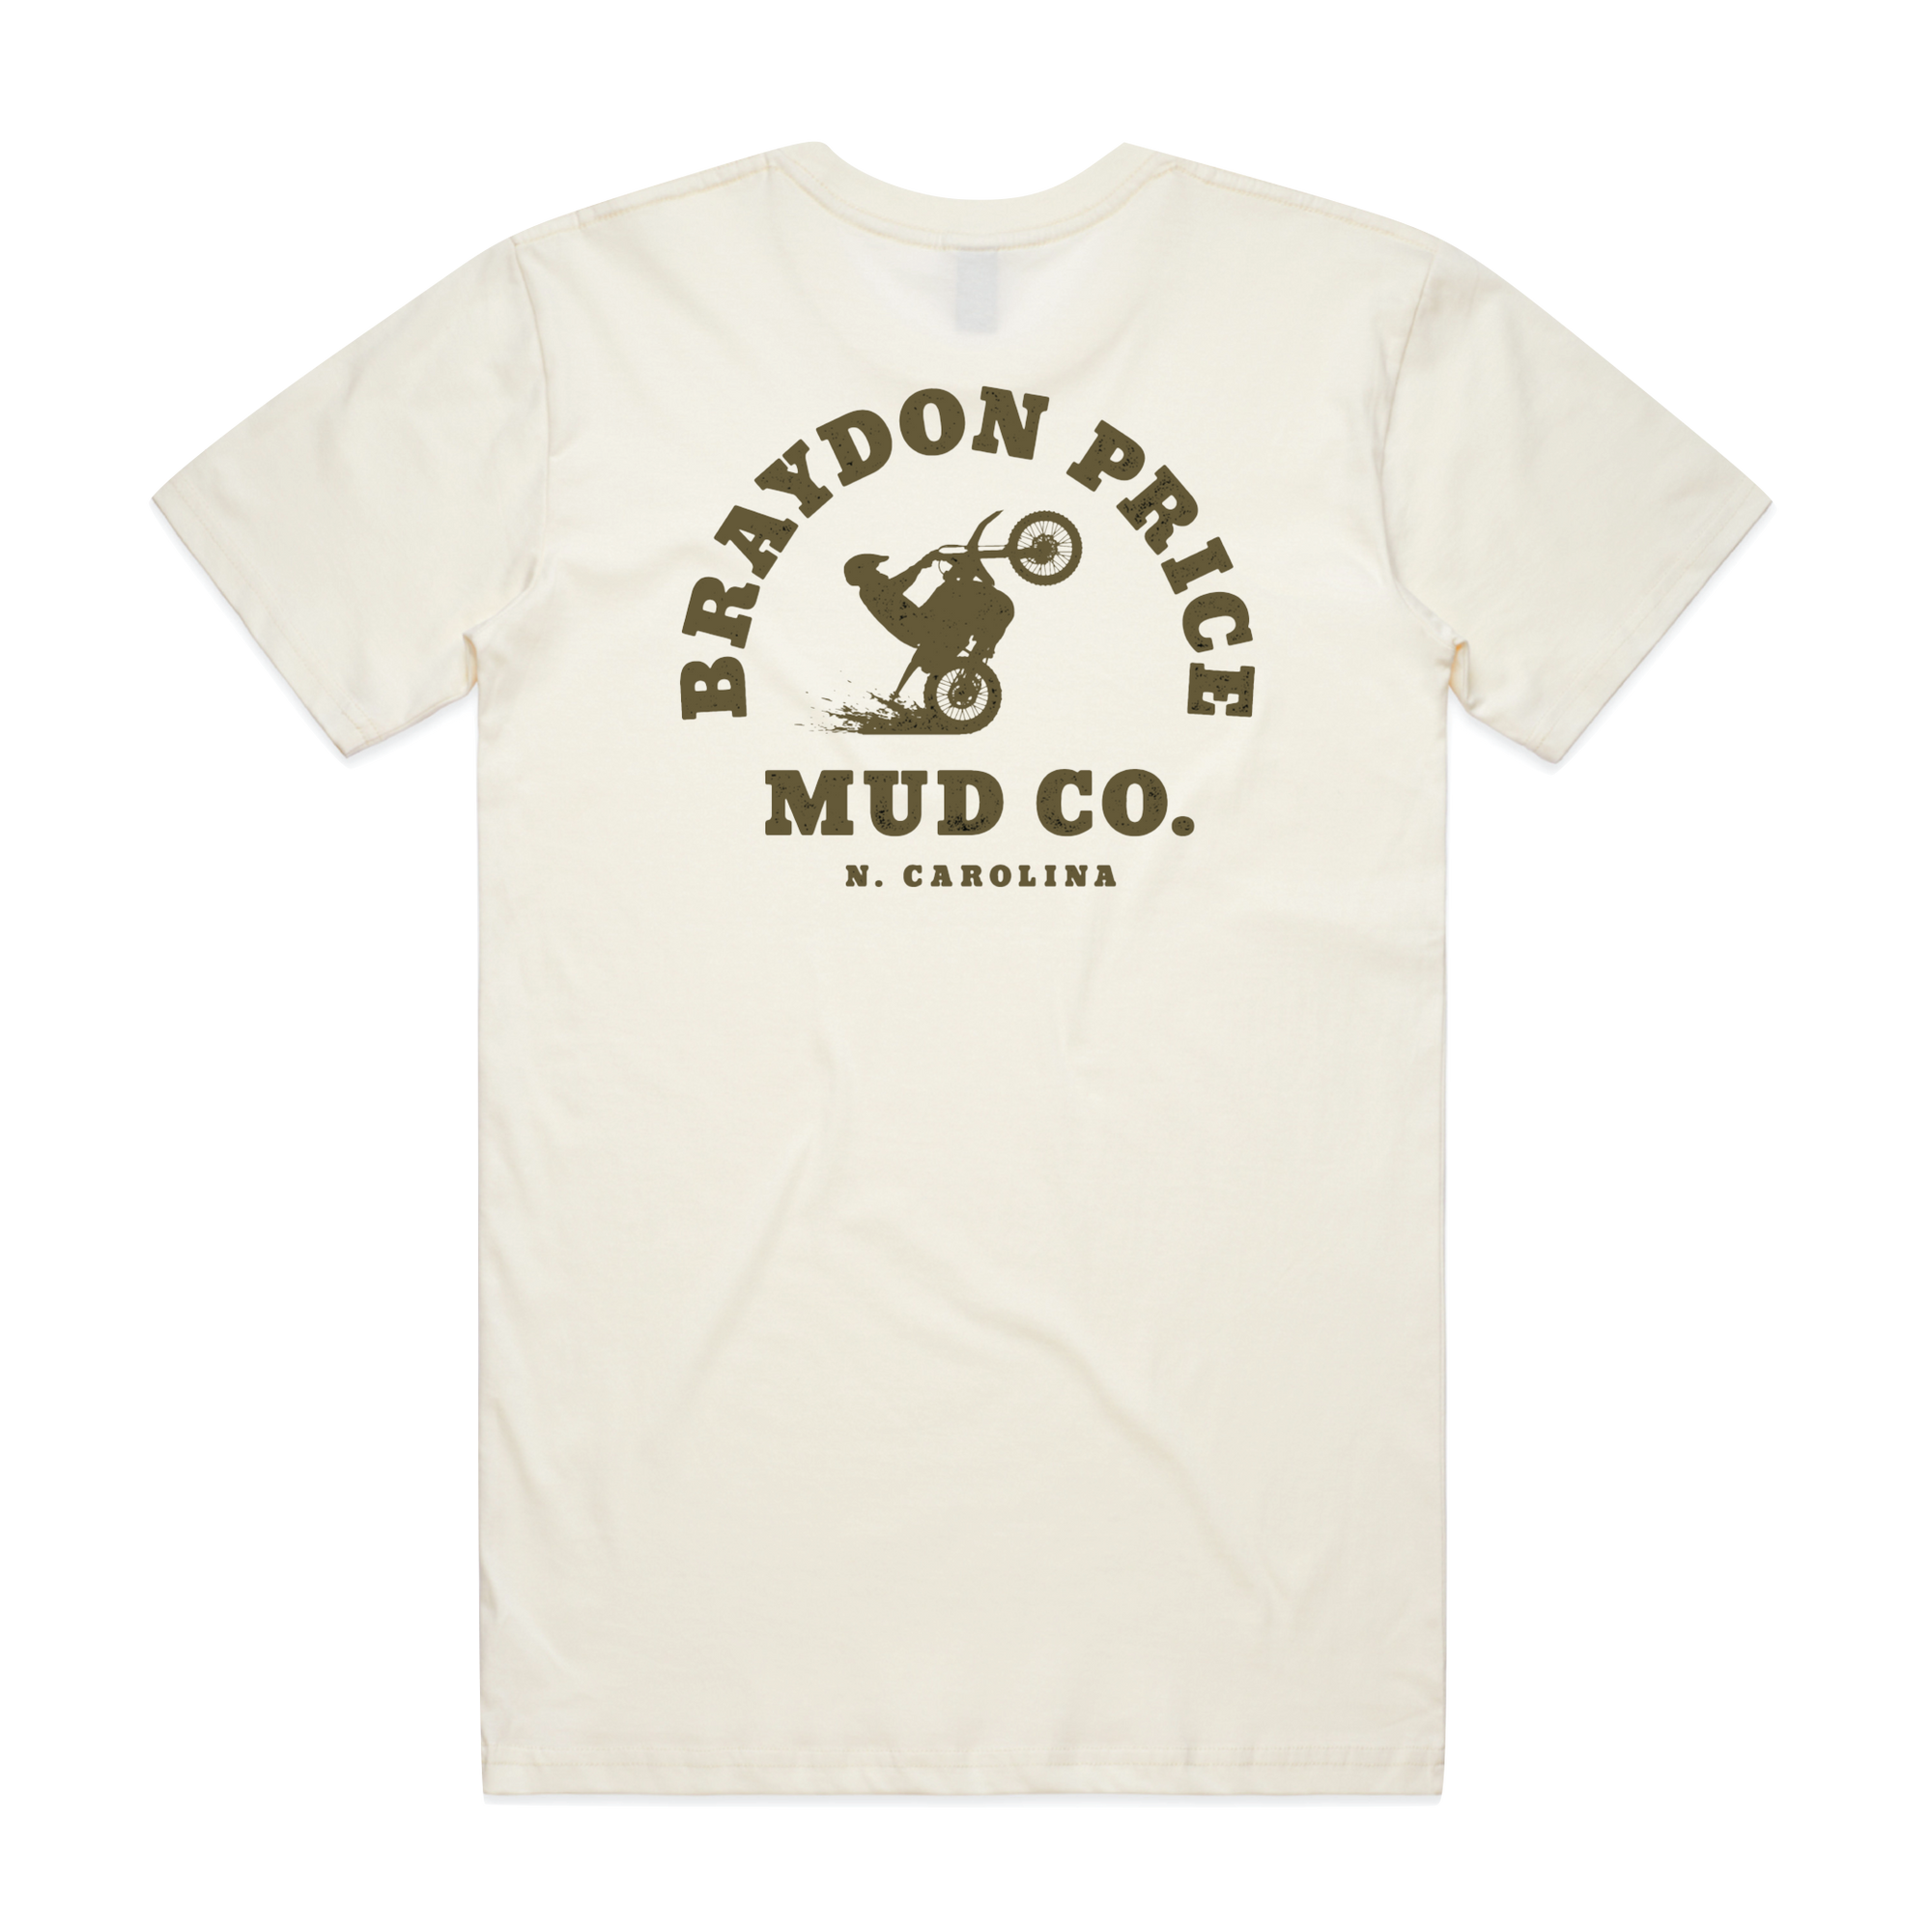 Braydon Price Mud Co Classic Tee